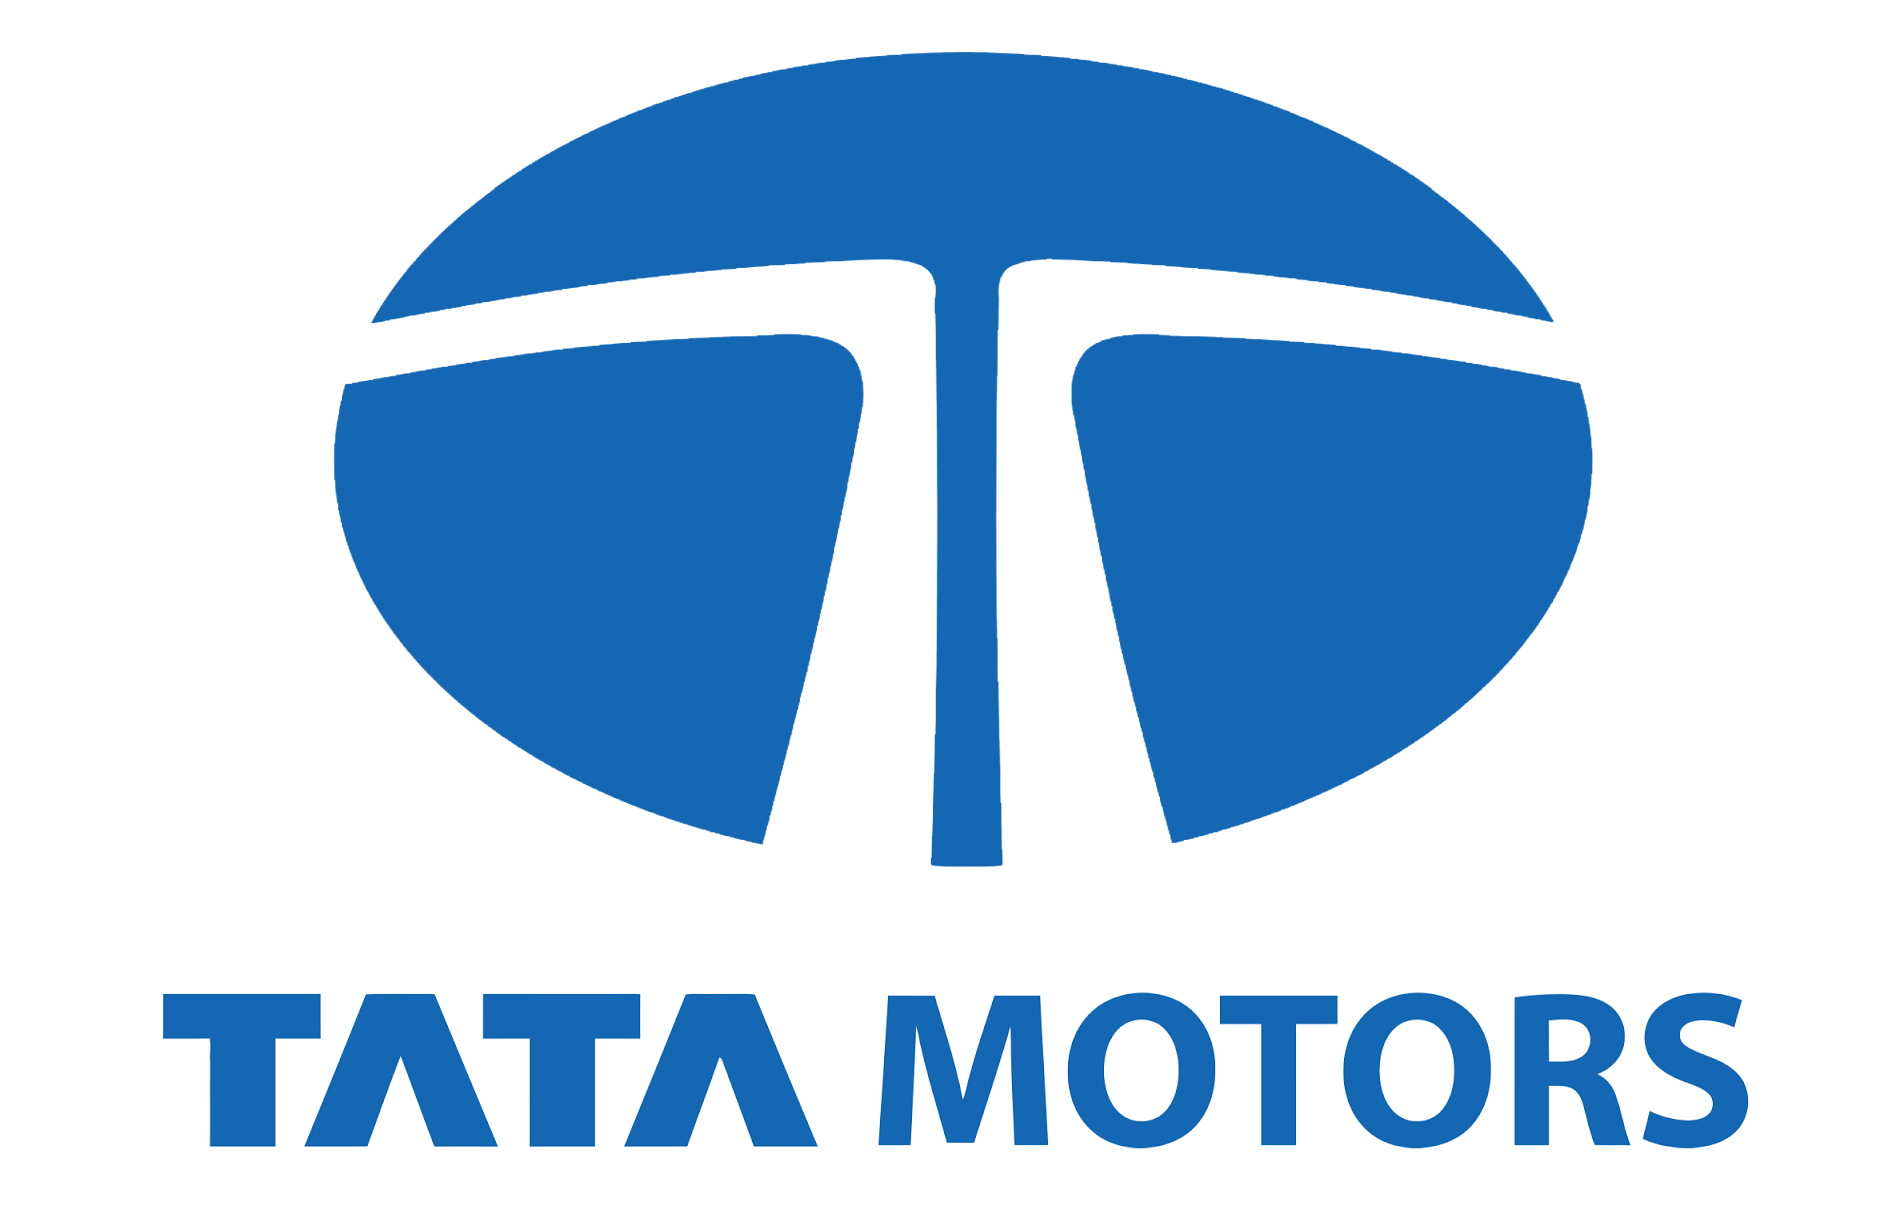 Tata Motors Cars Showroom - Dunac Cars and Commercials|Show Room|Automotive